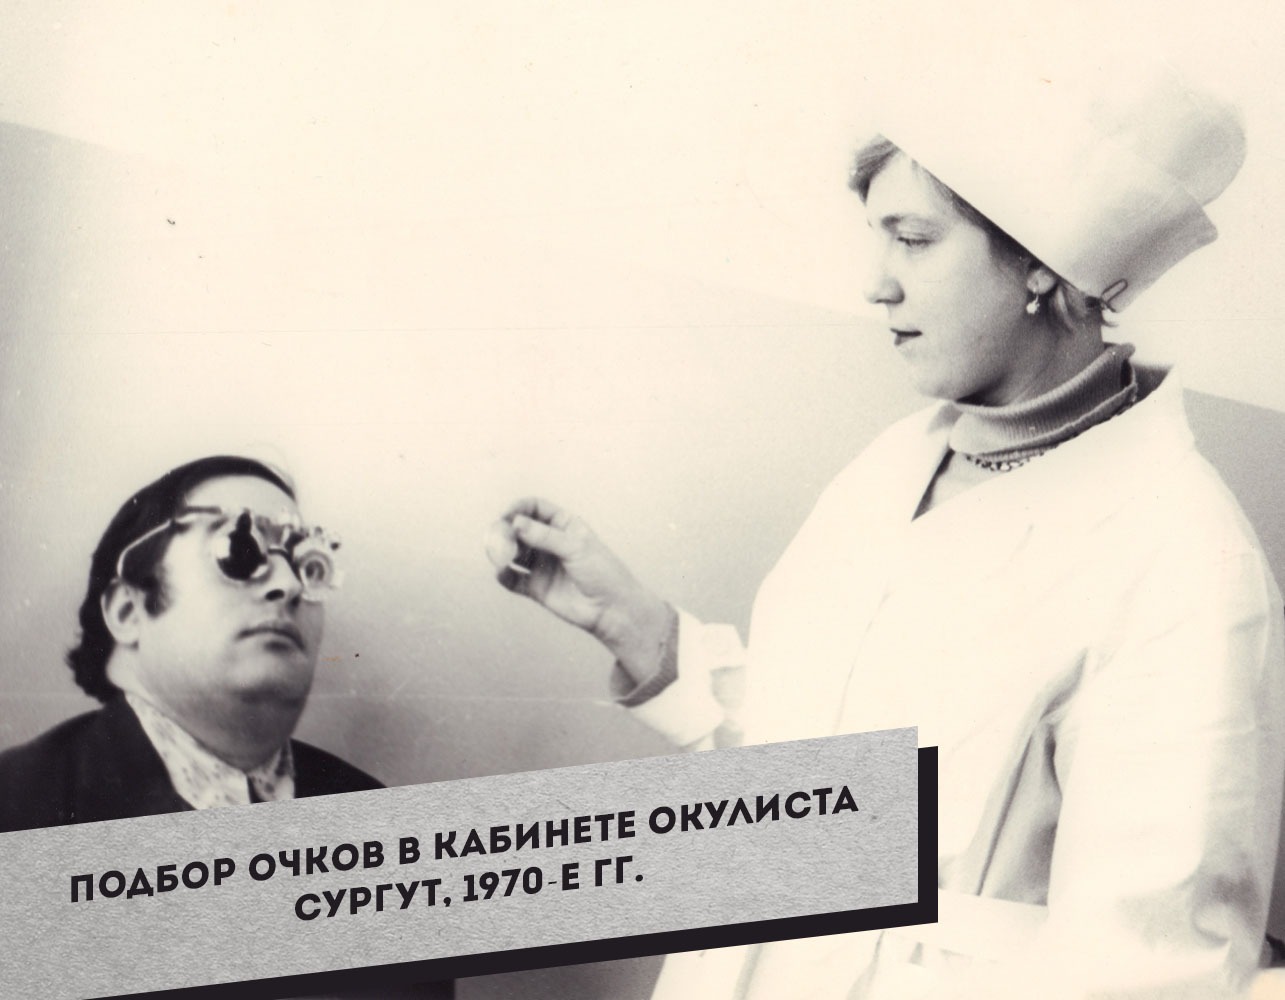 8.-Podbor-ochkov-v-kabinete-okulista.-Surgut-1970-e-gg.